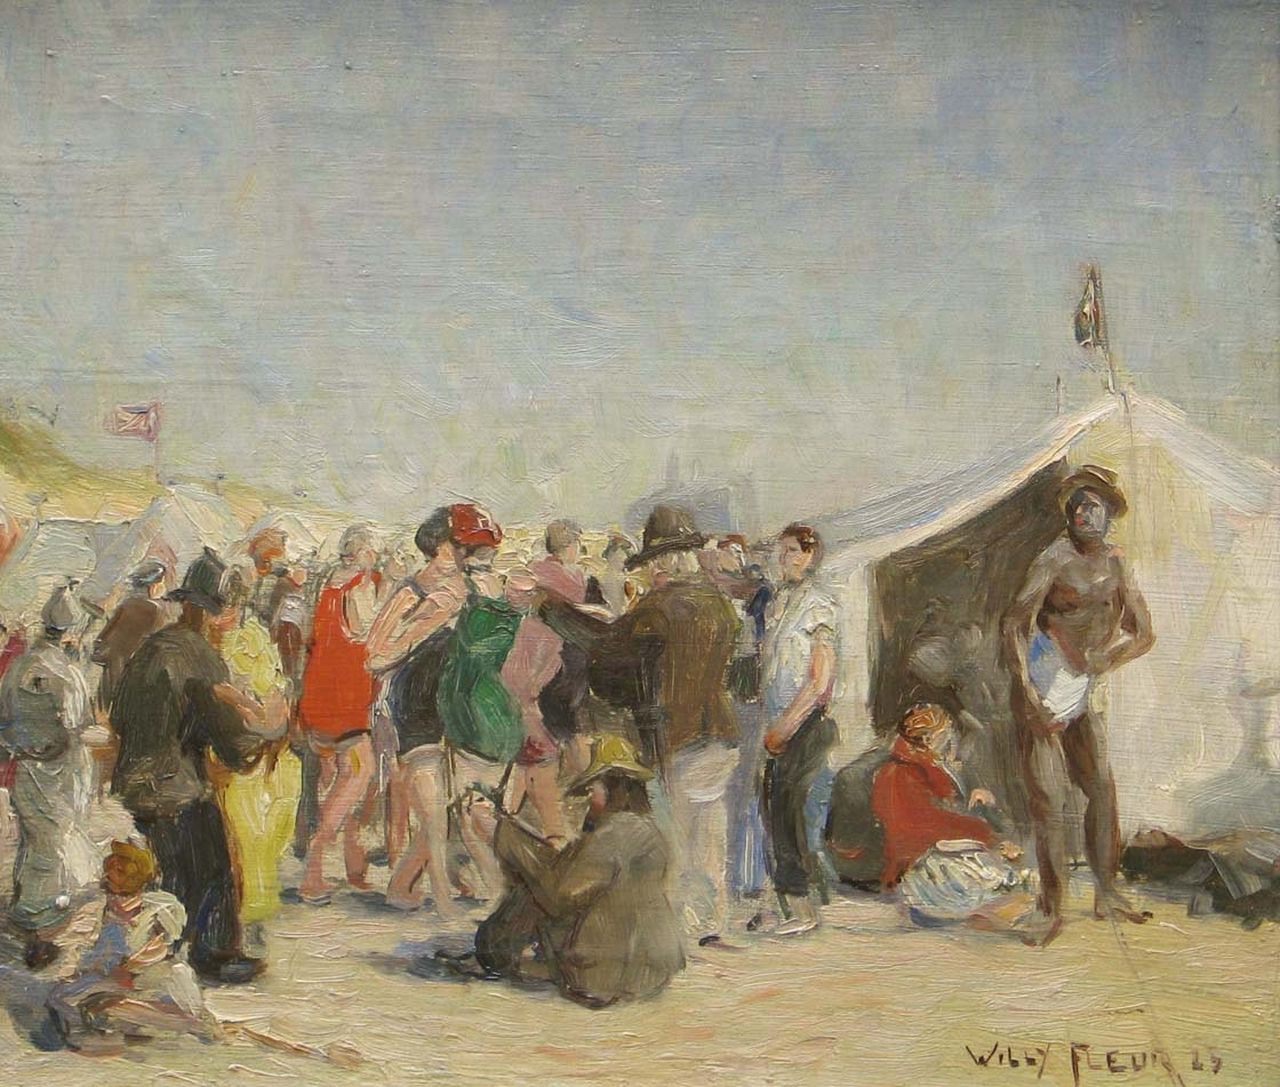 Fleur J.W.  | Johan Willem 'Willy' Fleur, A party at the beach, Öl auf Leinwand 30,1 x 35,2 cm, signed l.r. und dated '23